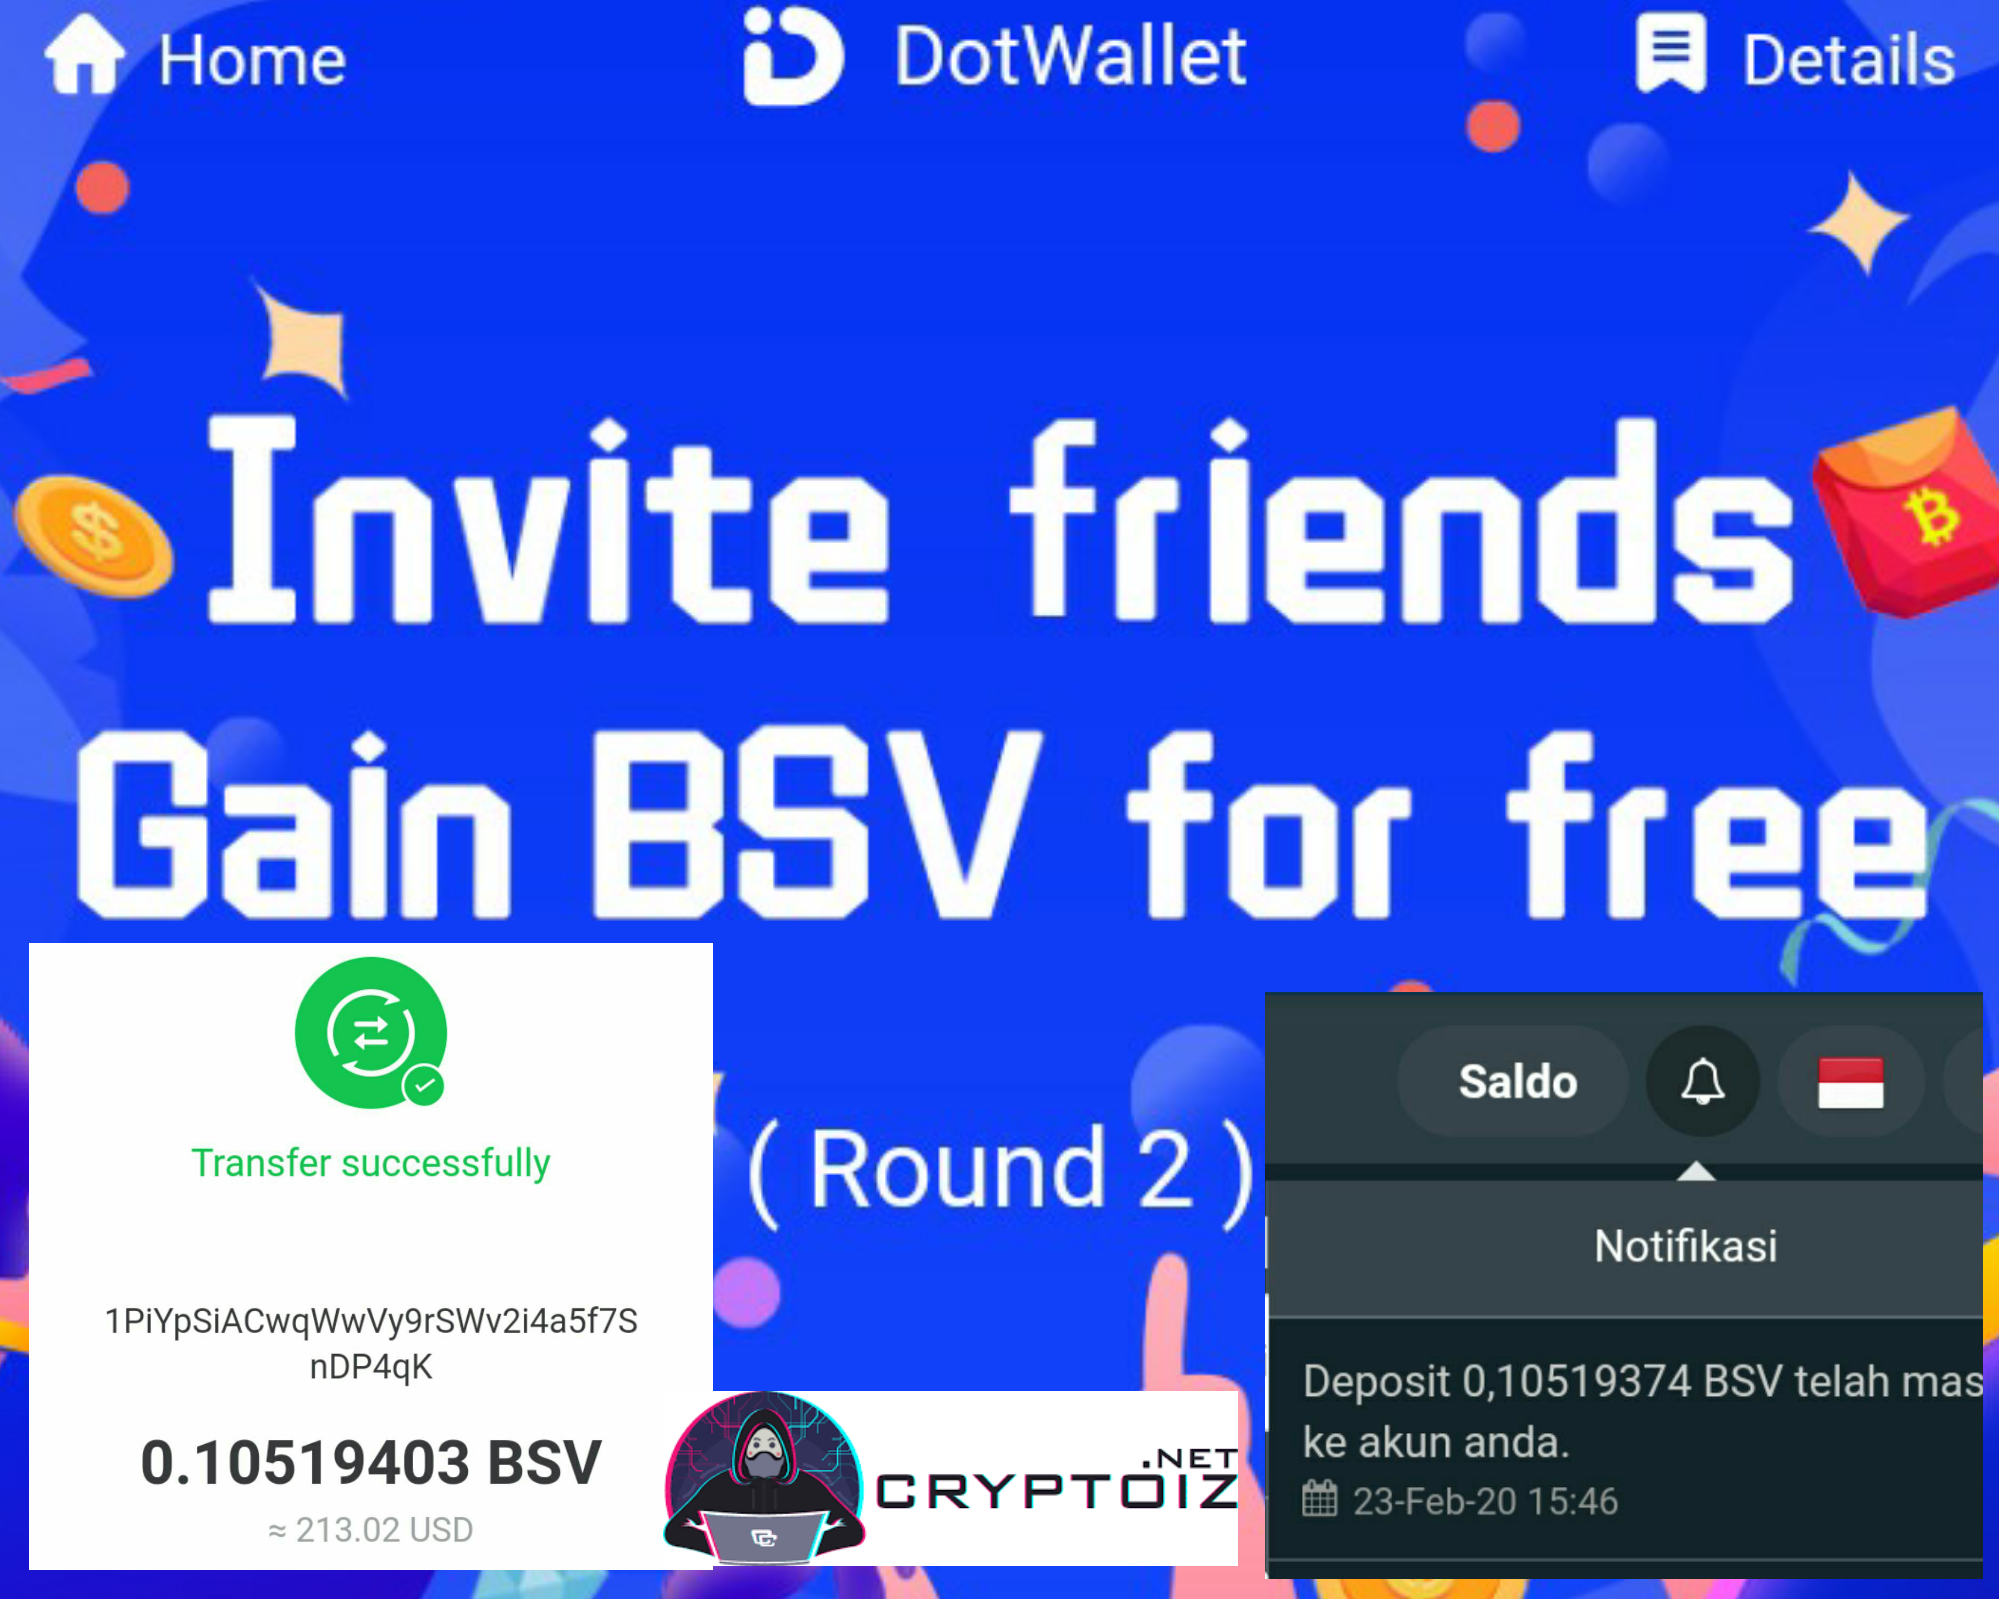 DotWallet Round 2 Free Upto 1 BSV Terbukti Legit | New User Gratis 100k Sat BSV